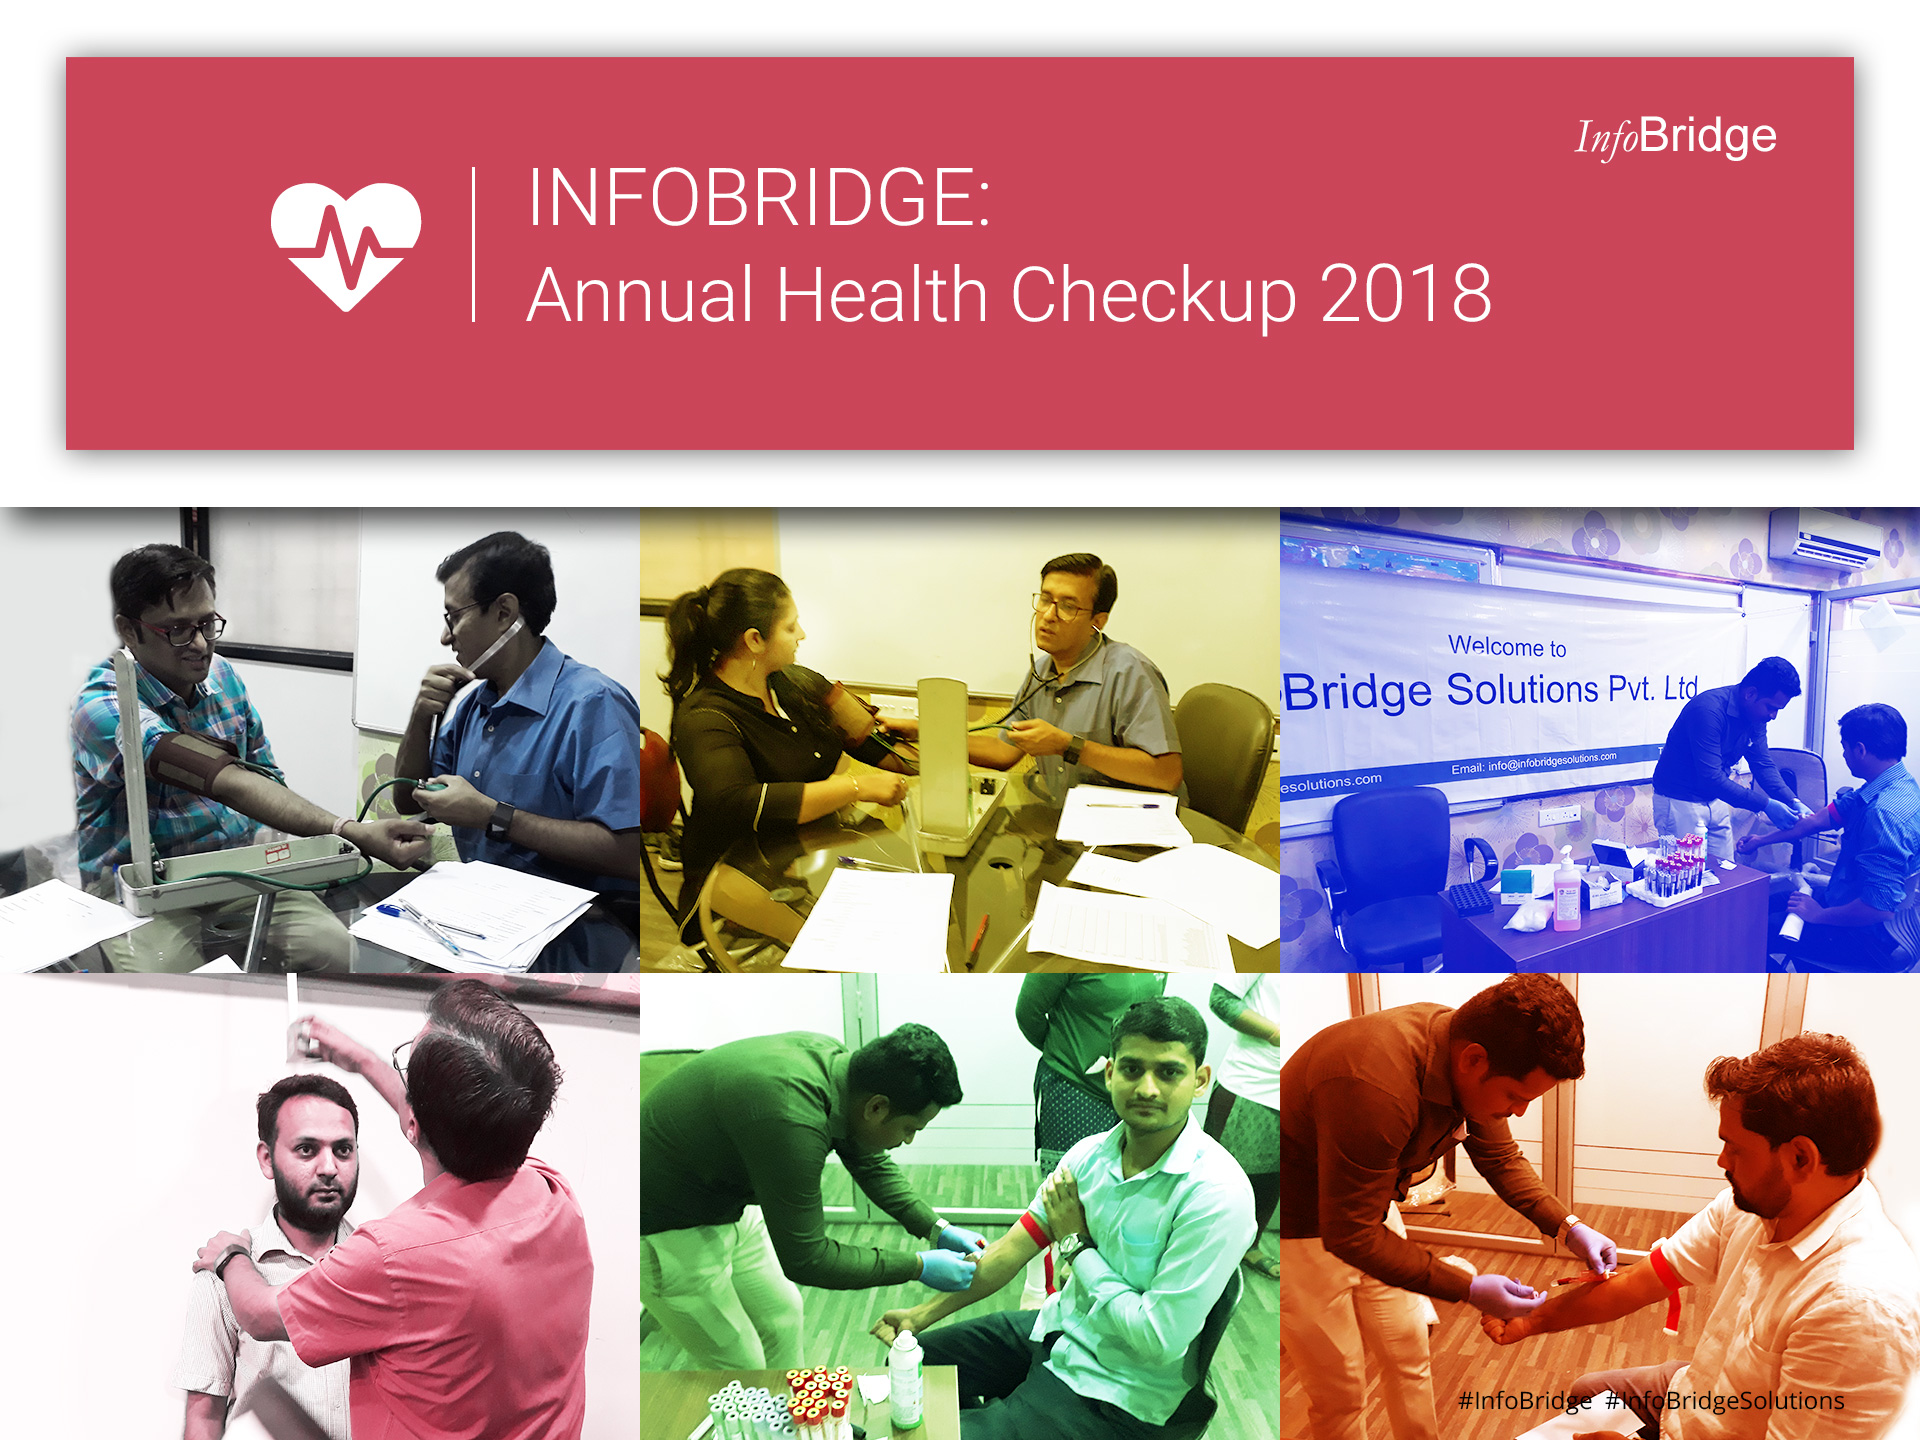 InfoBridge Solutions: Annual Health Checkup 2018